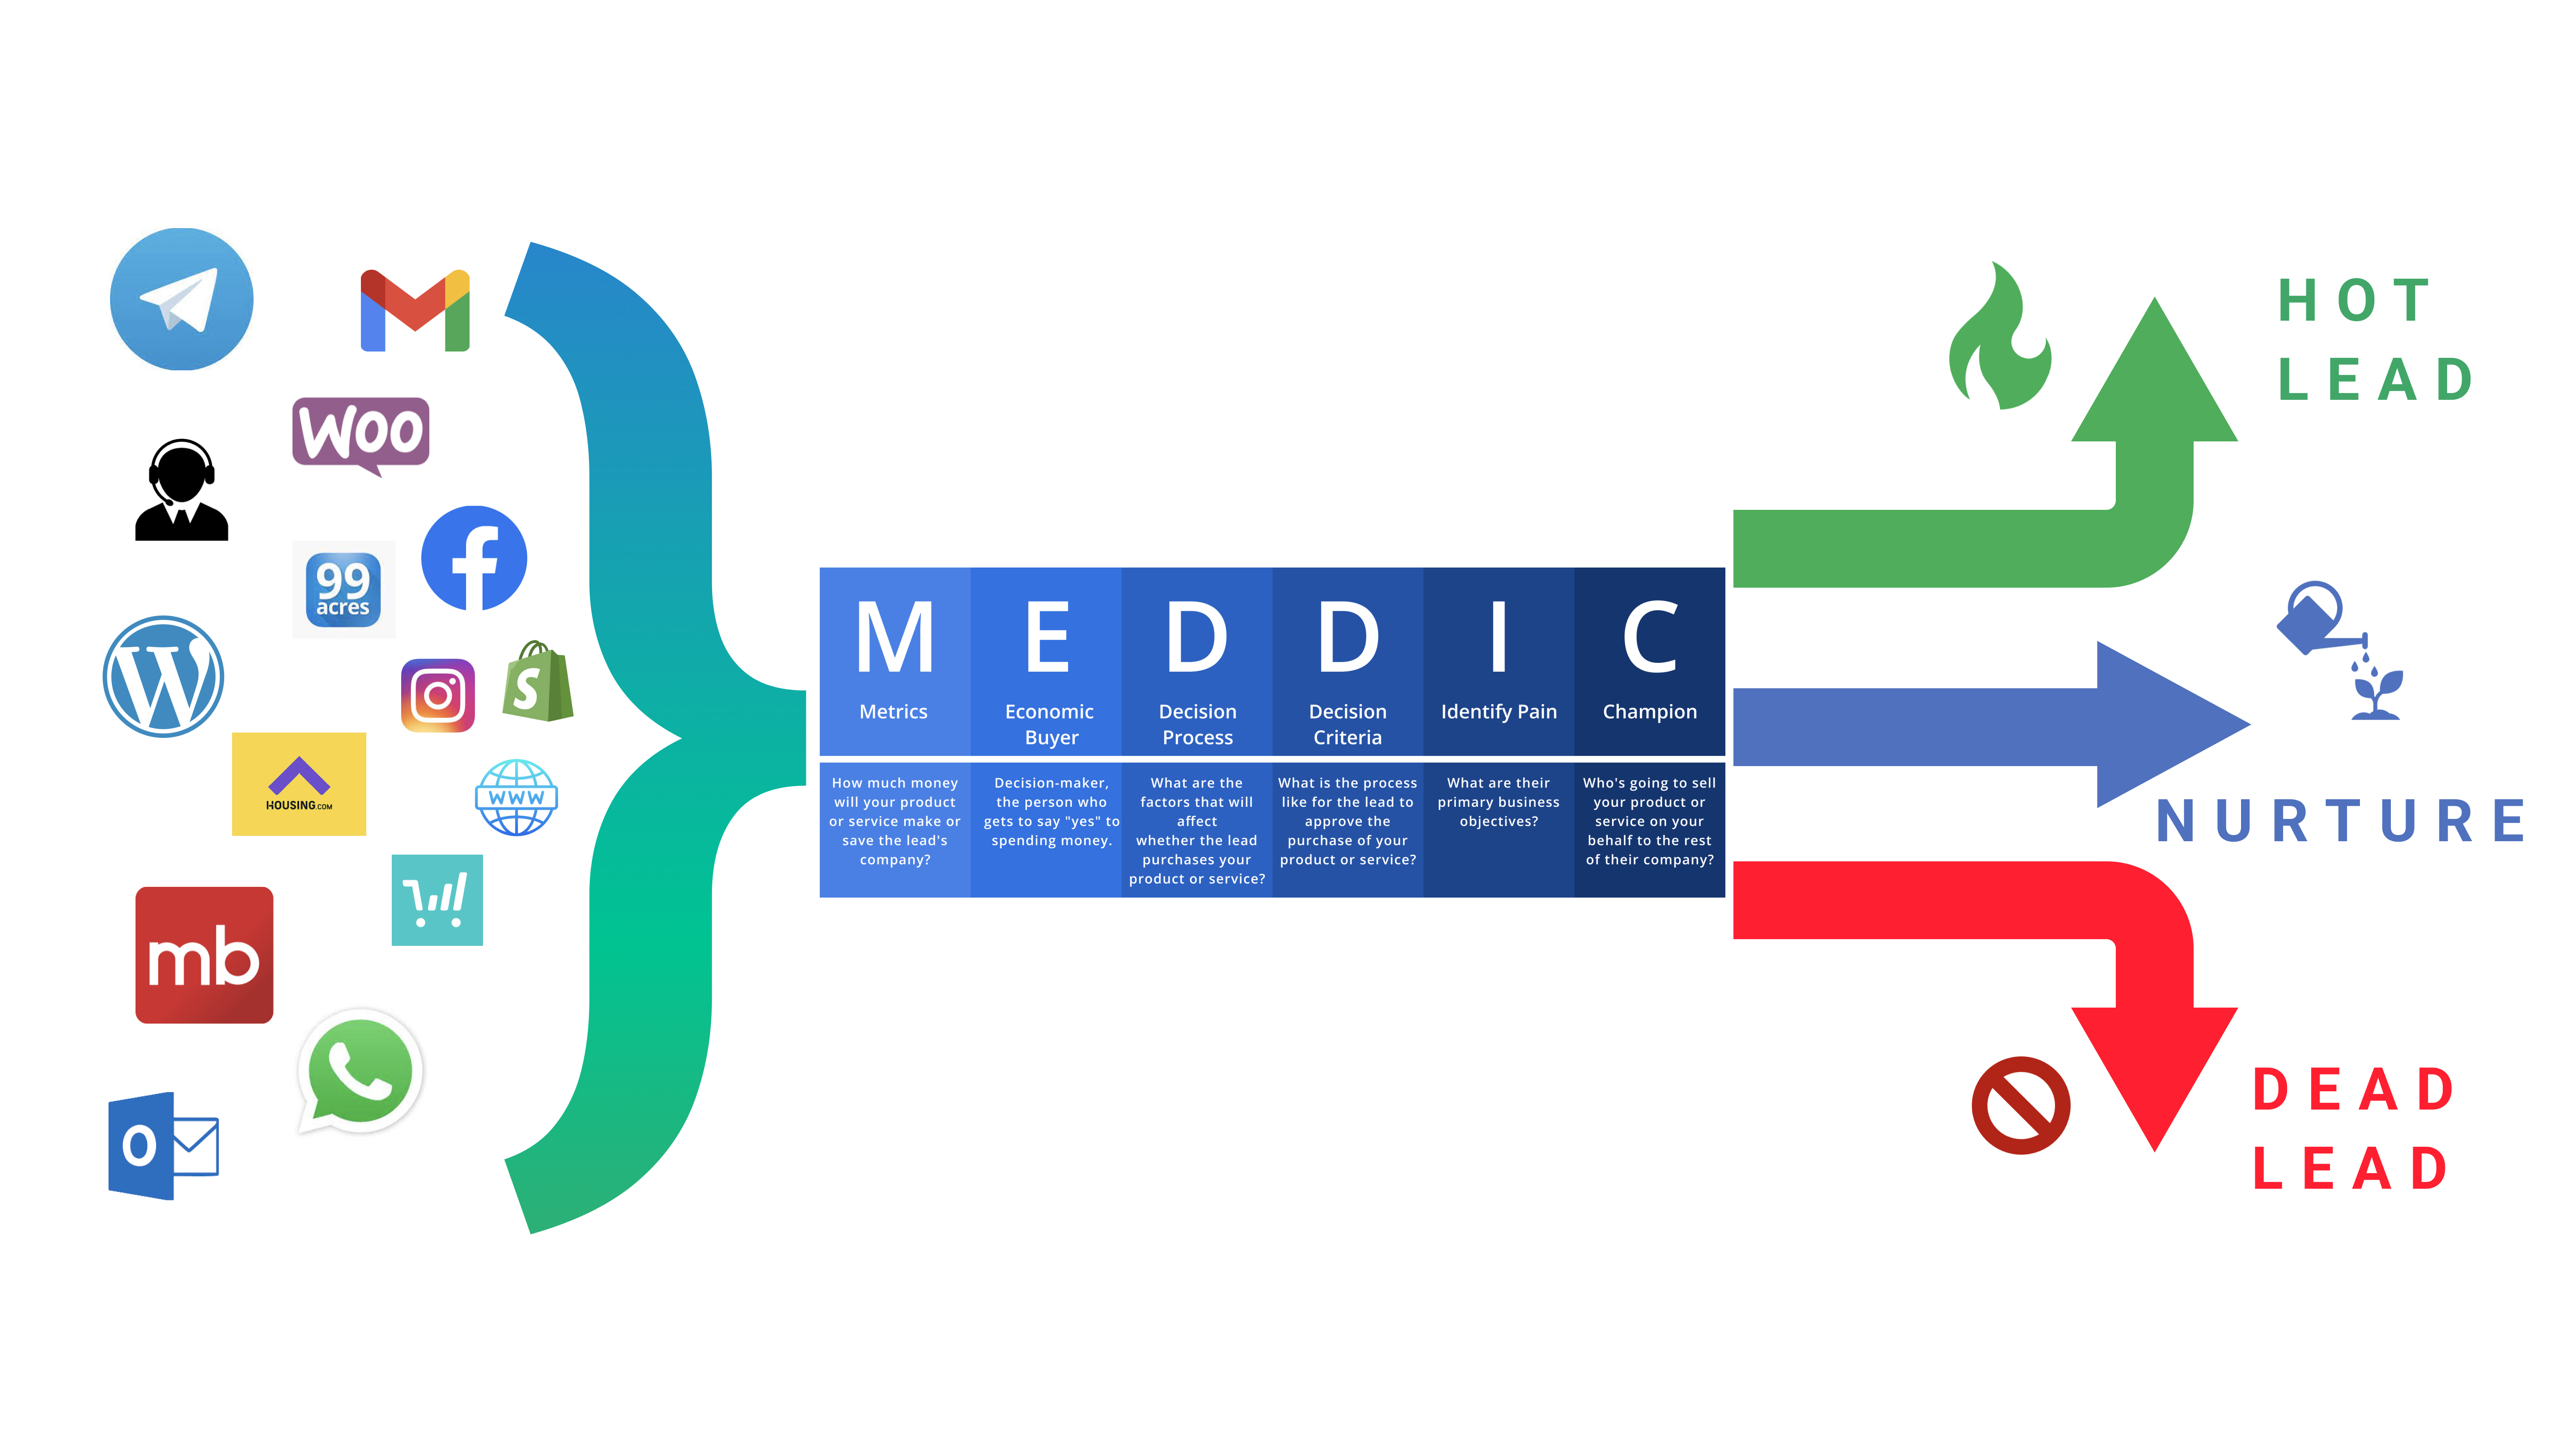 MEDDIC Framework to qualify leads- Budget Authority Need timeline.